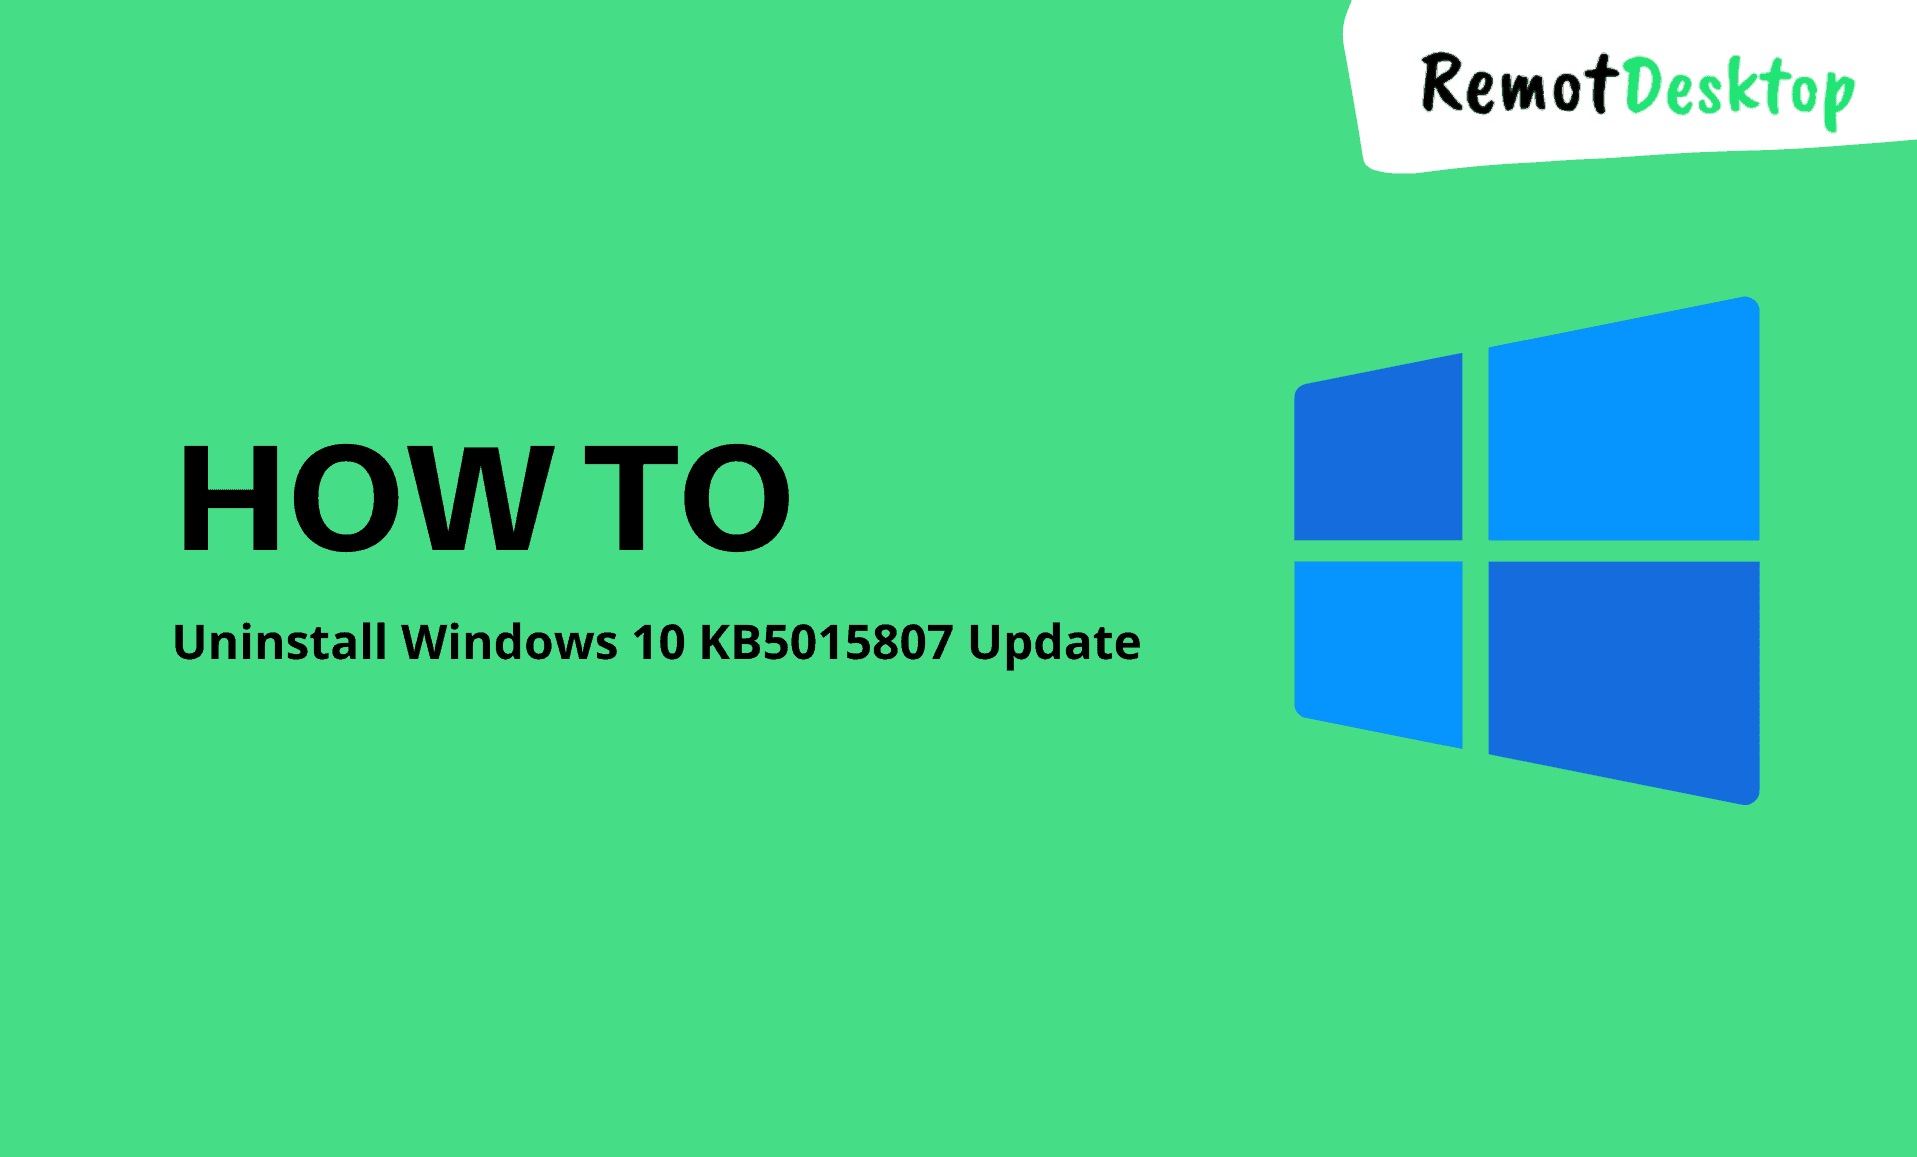 Uninstall Windows 10 Update KB5015807